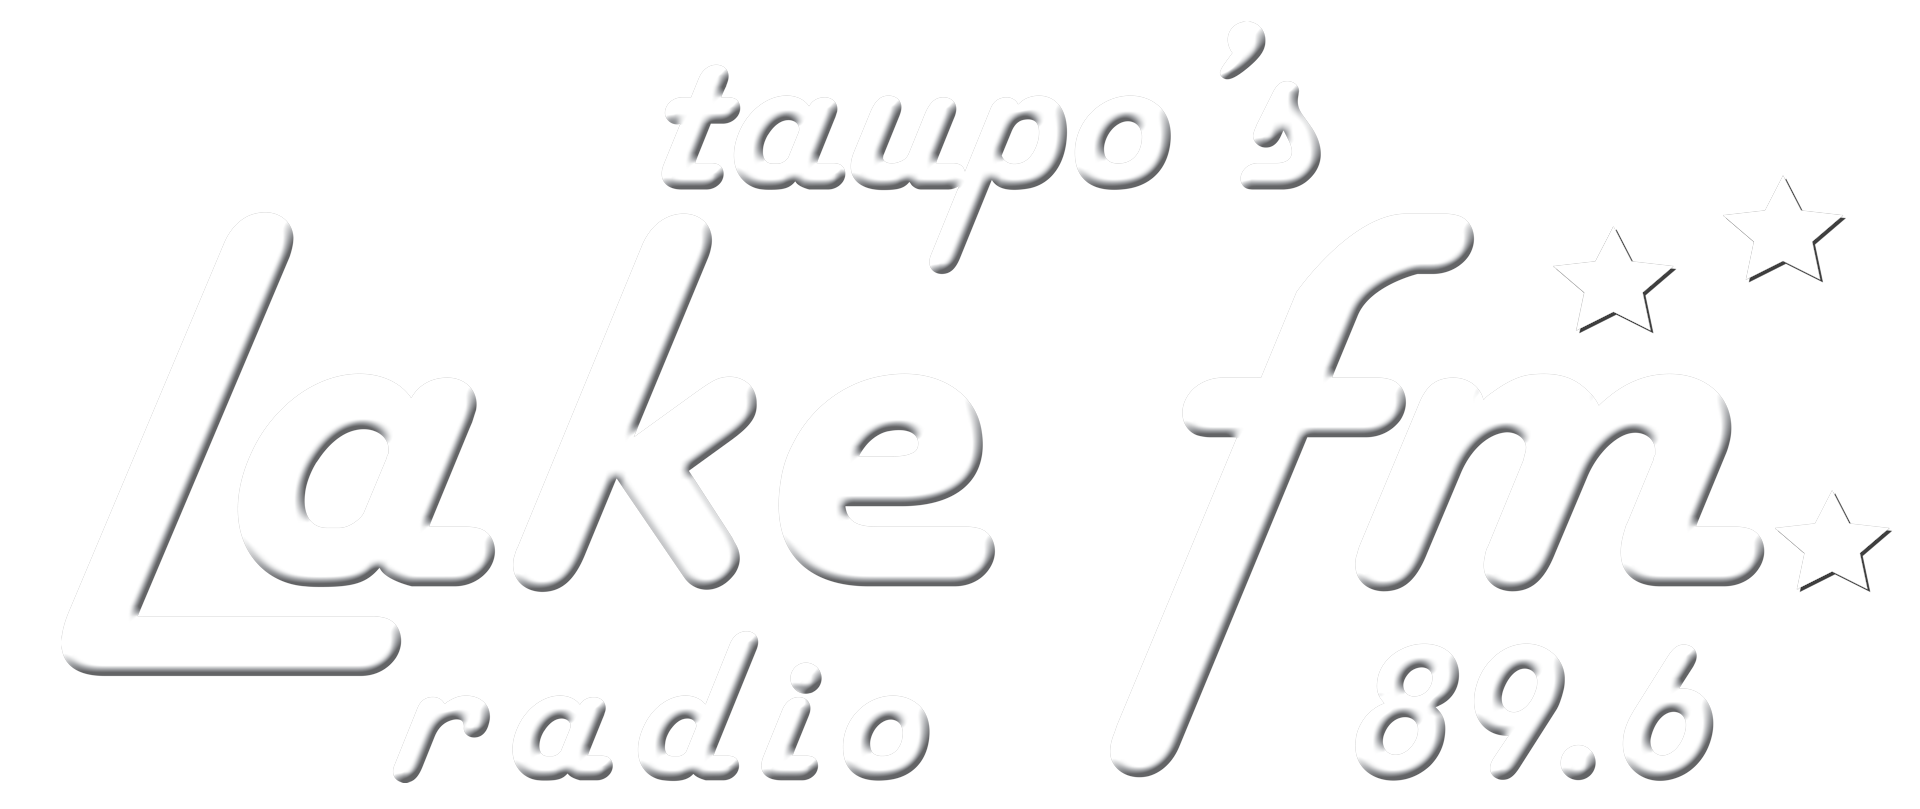 Lake FM - Taupos Lake FM 89.6 - New Zealand